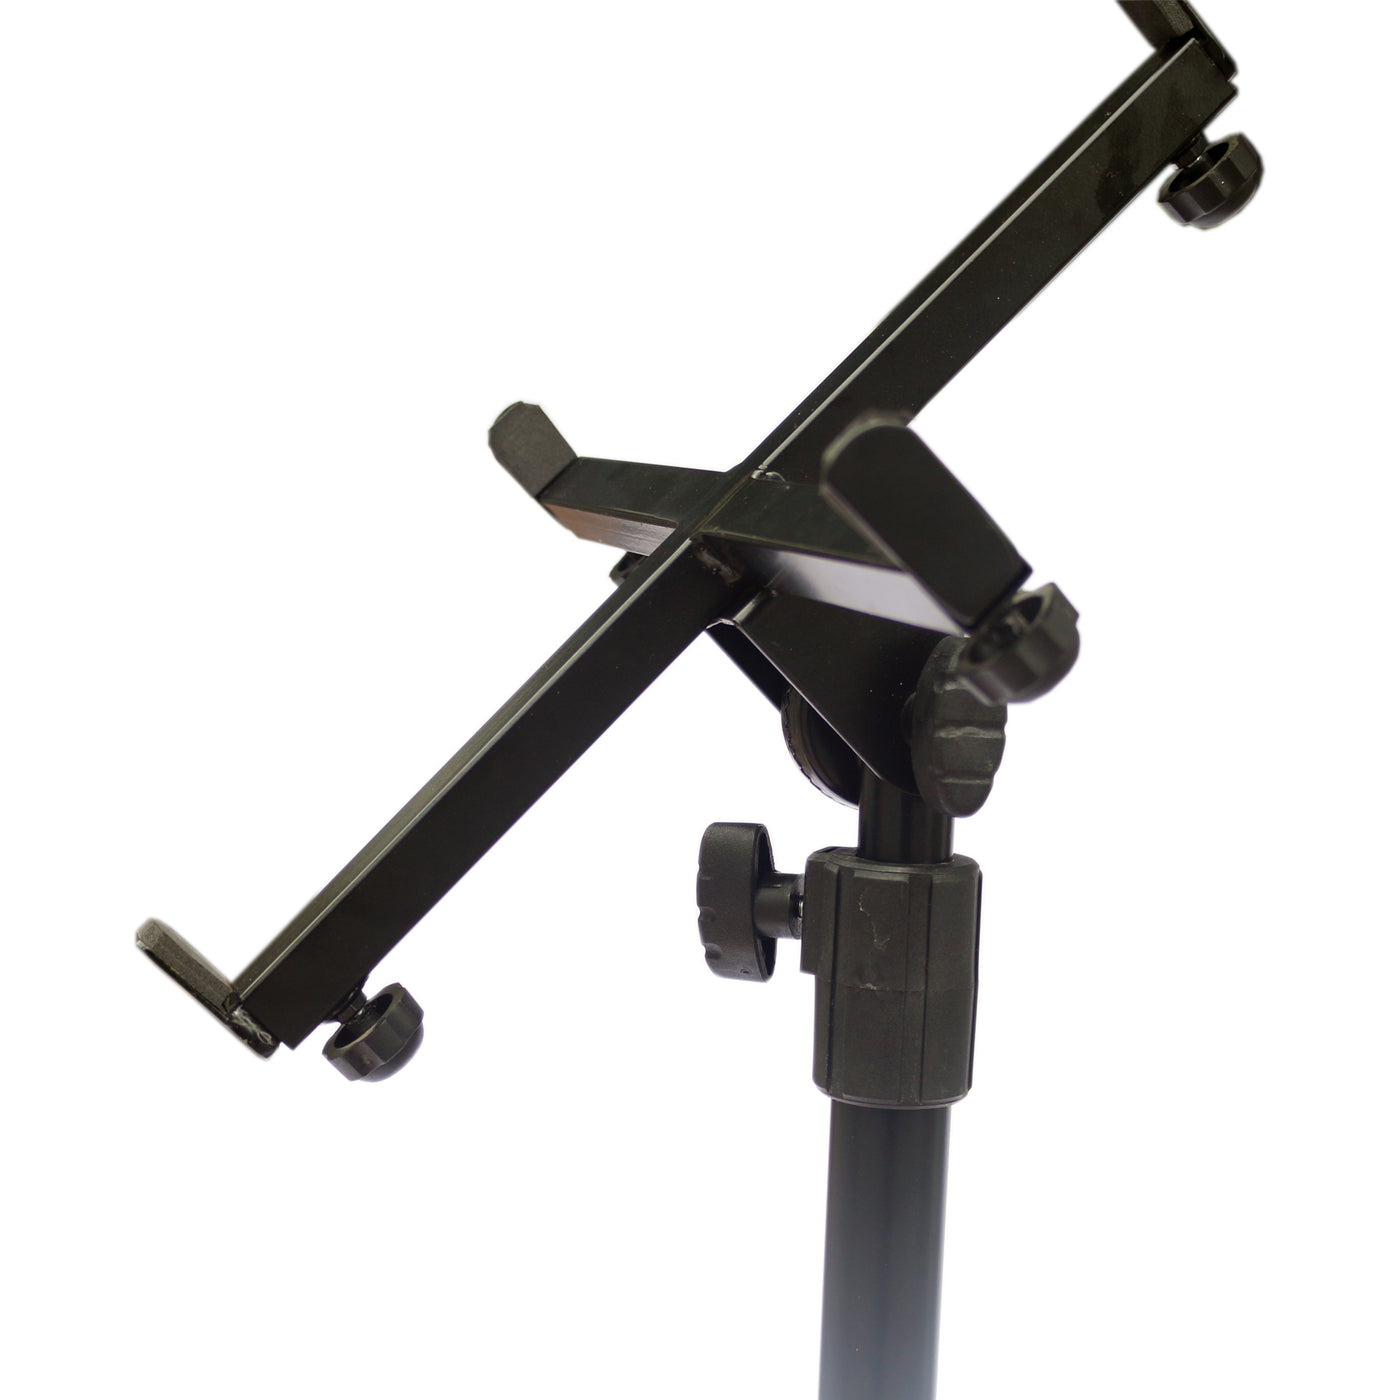 Handike Adjustable Bendir Stand CSK-350